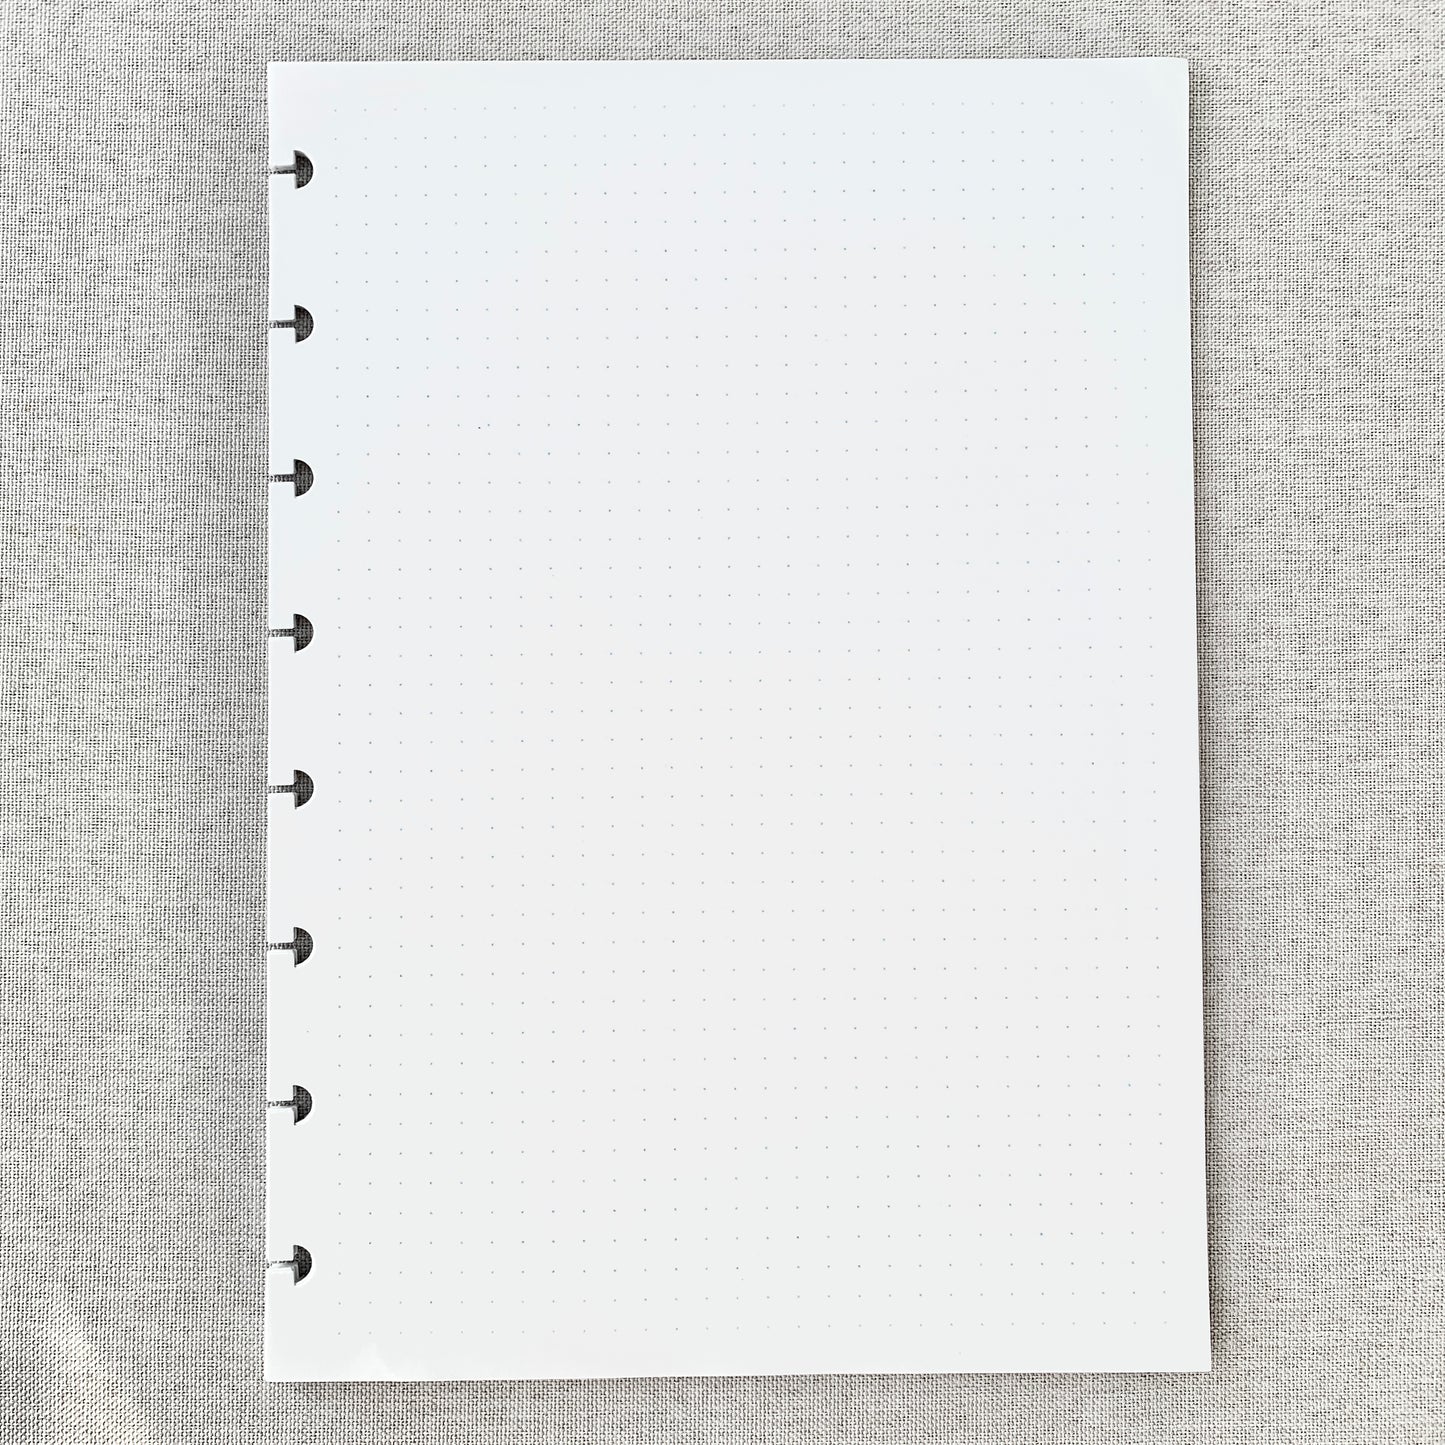 Dot Grid Discbound Notebook Insert - A5 - Dot Grid - Fountain Pen Friendly Paper